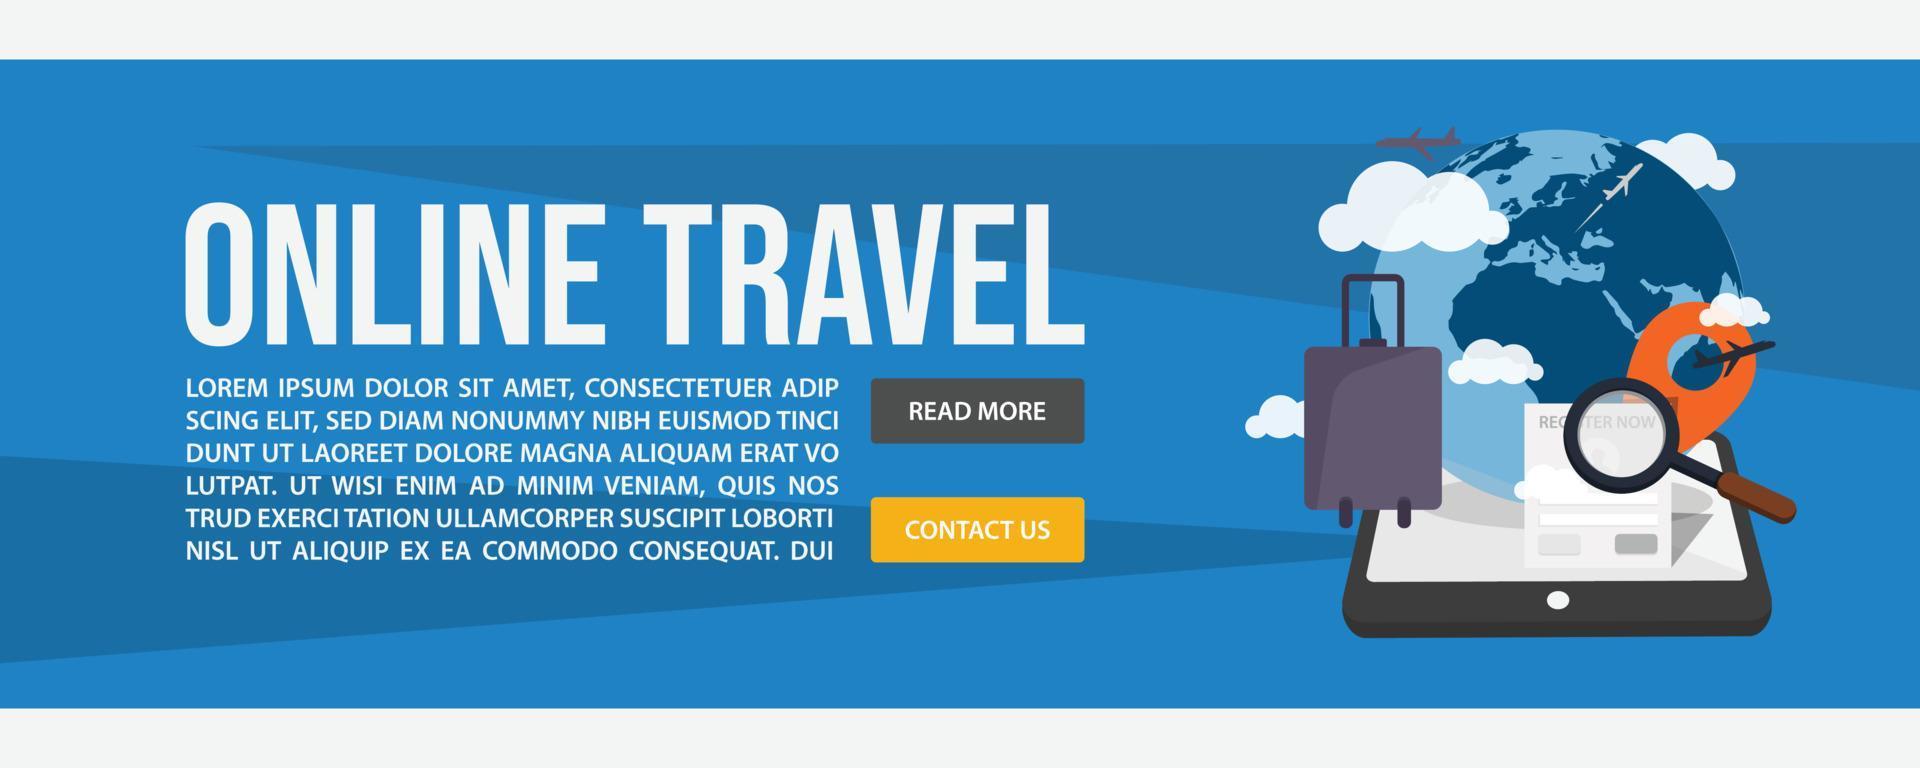 Online travel web banner template design vector